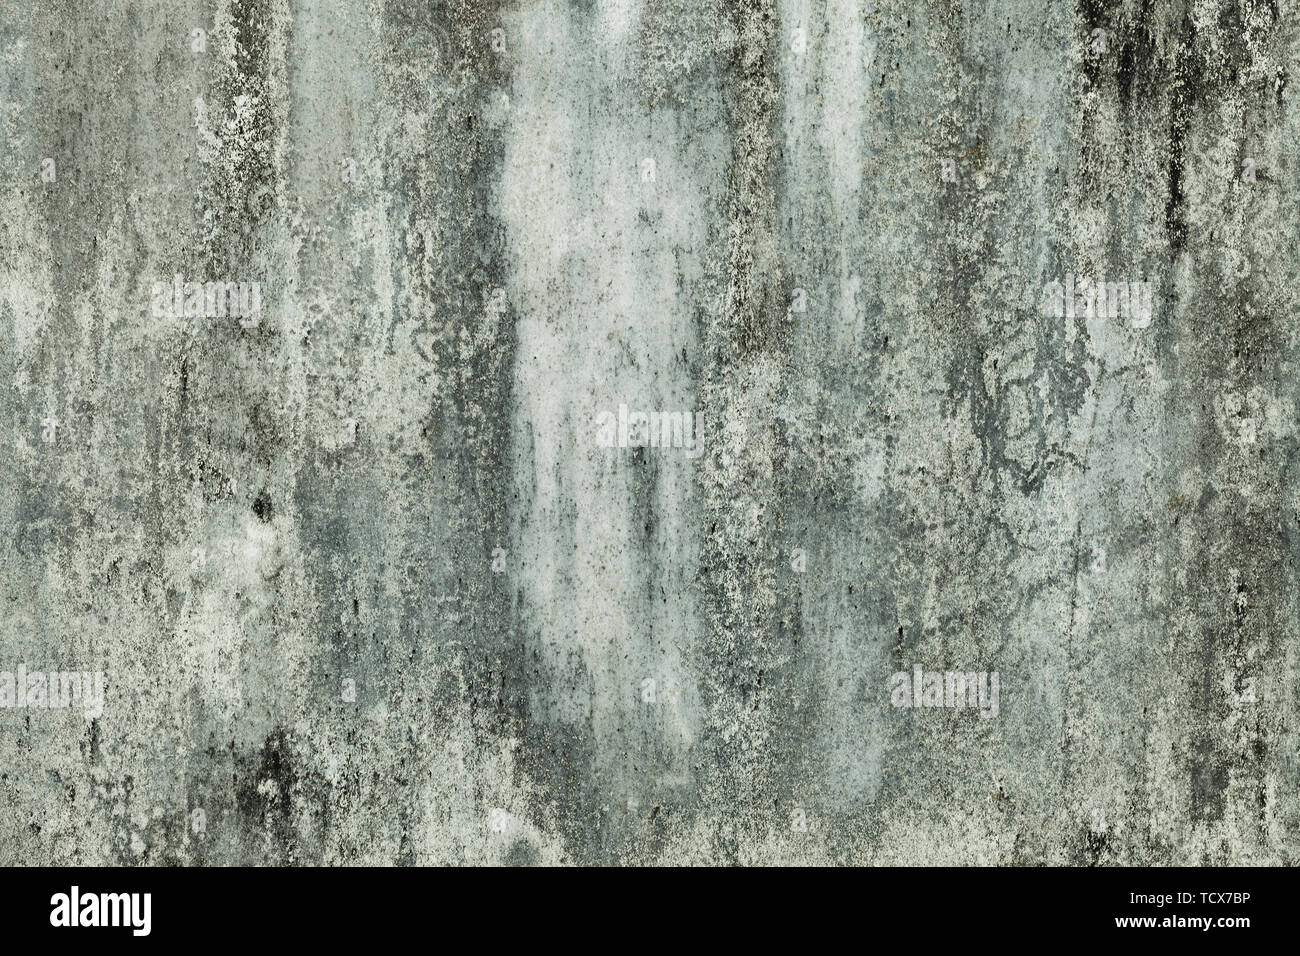 Abstract background dark gray texture background. Vintage grunge background styles. Stock Photo